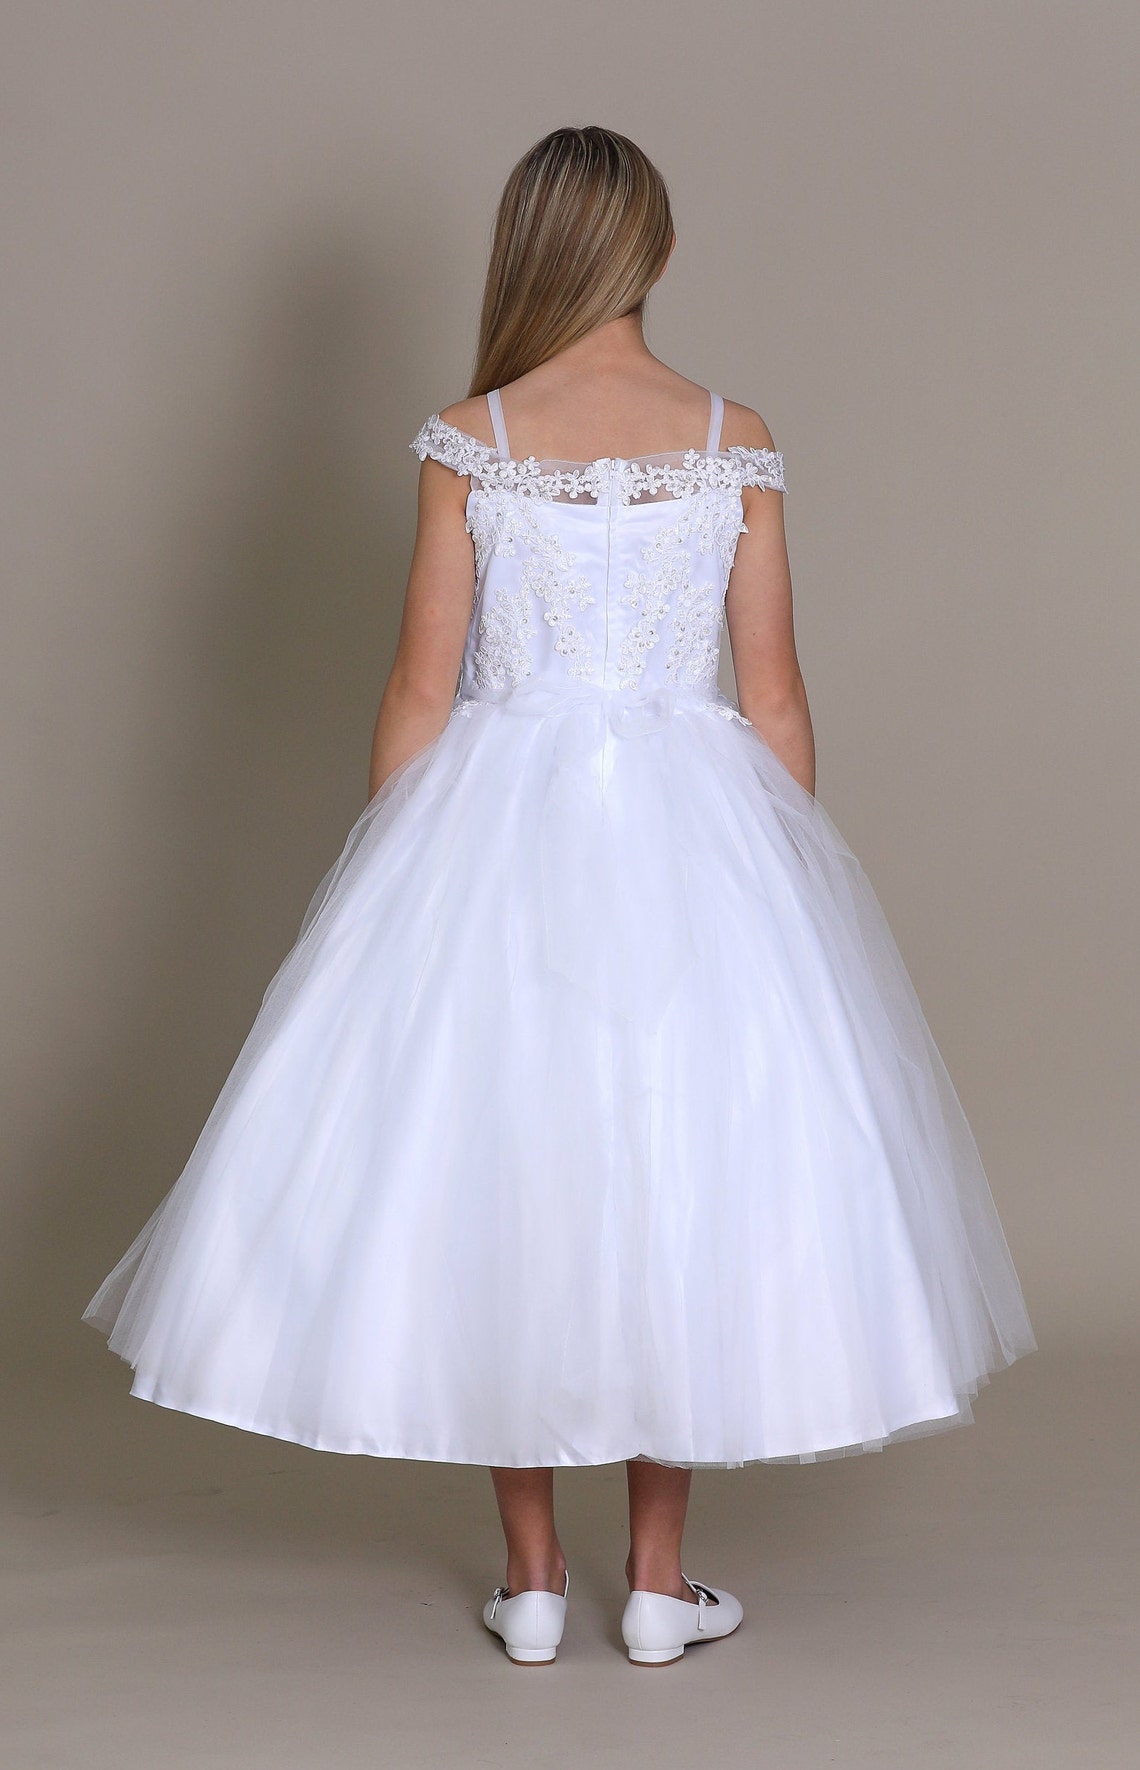 Daisy White or Ivory Communion Dress 1st Communion Dresses | Etsy